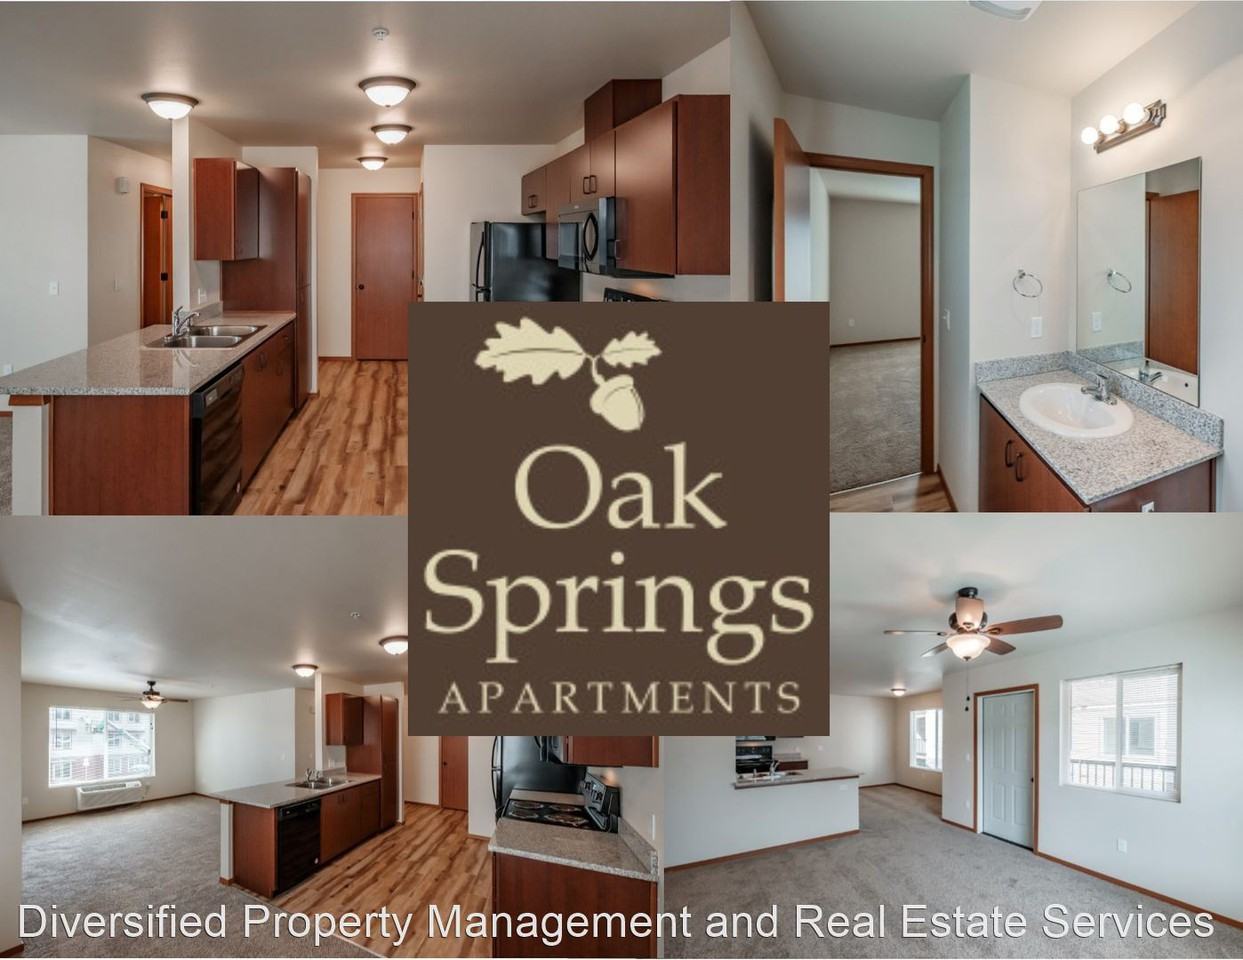 Oak Springs Apartments